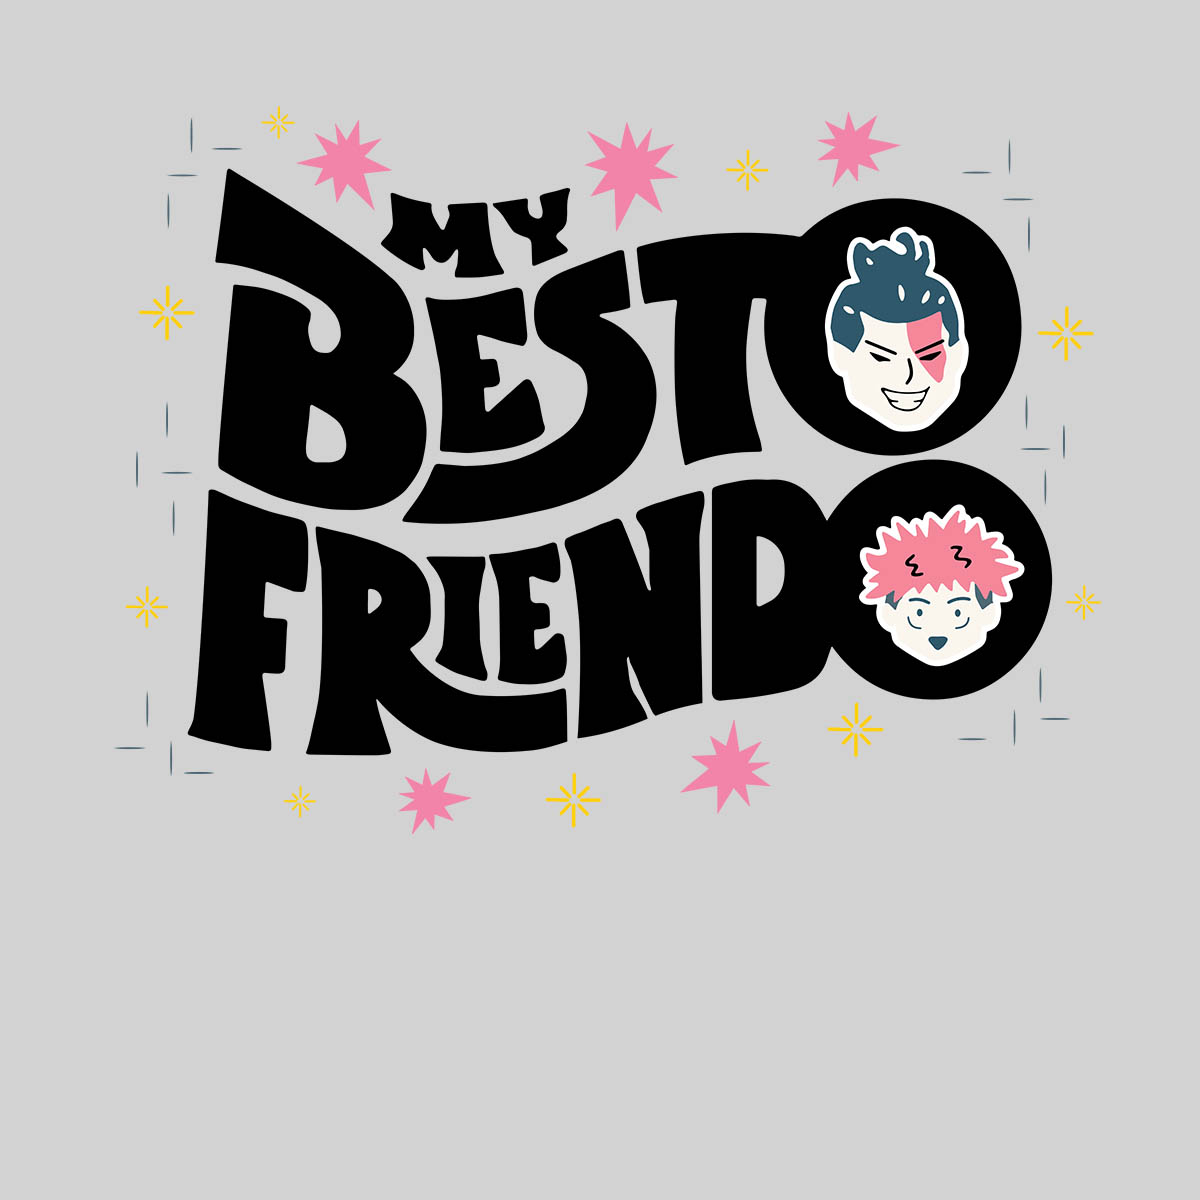 My Besto Friendo Jujutsu Kaisen Todo Aoi Anime T-shirt for Kids